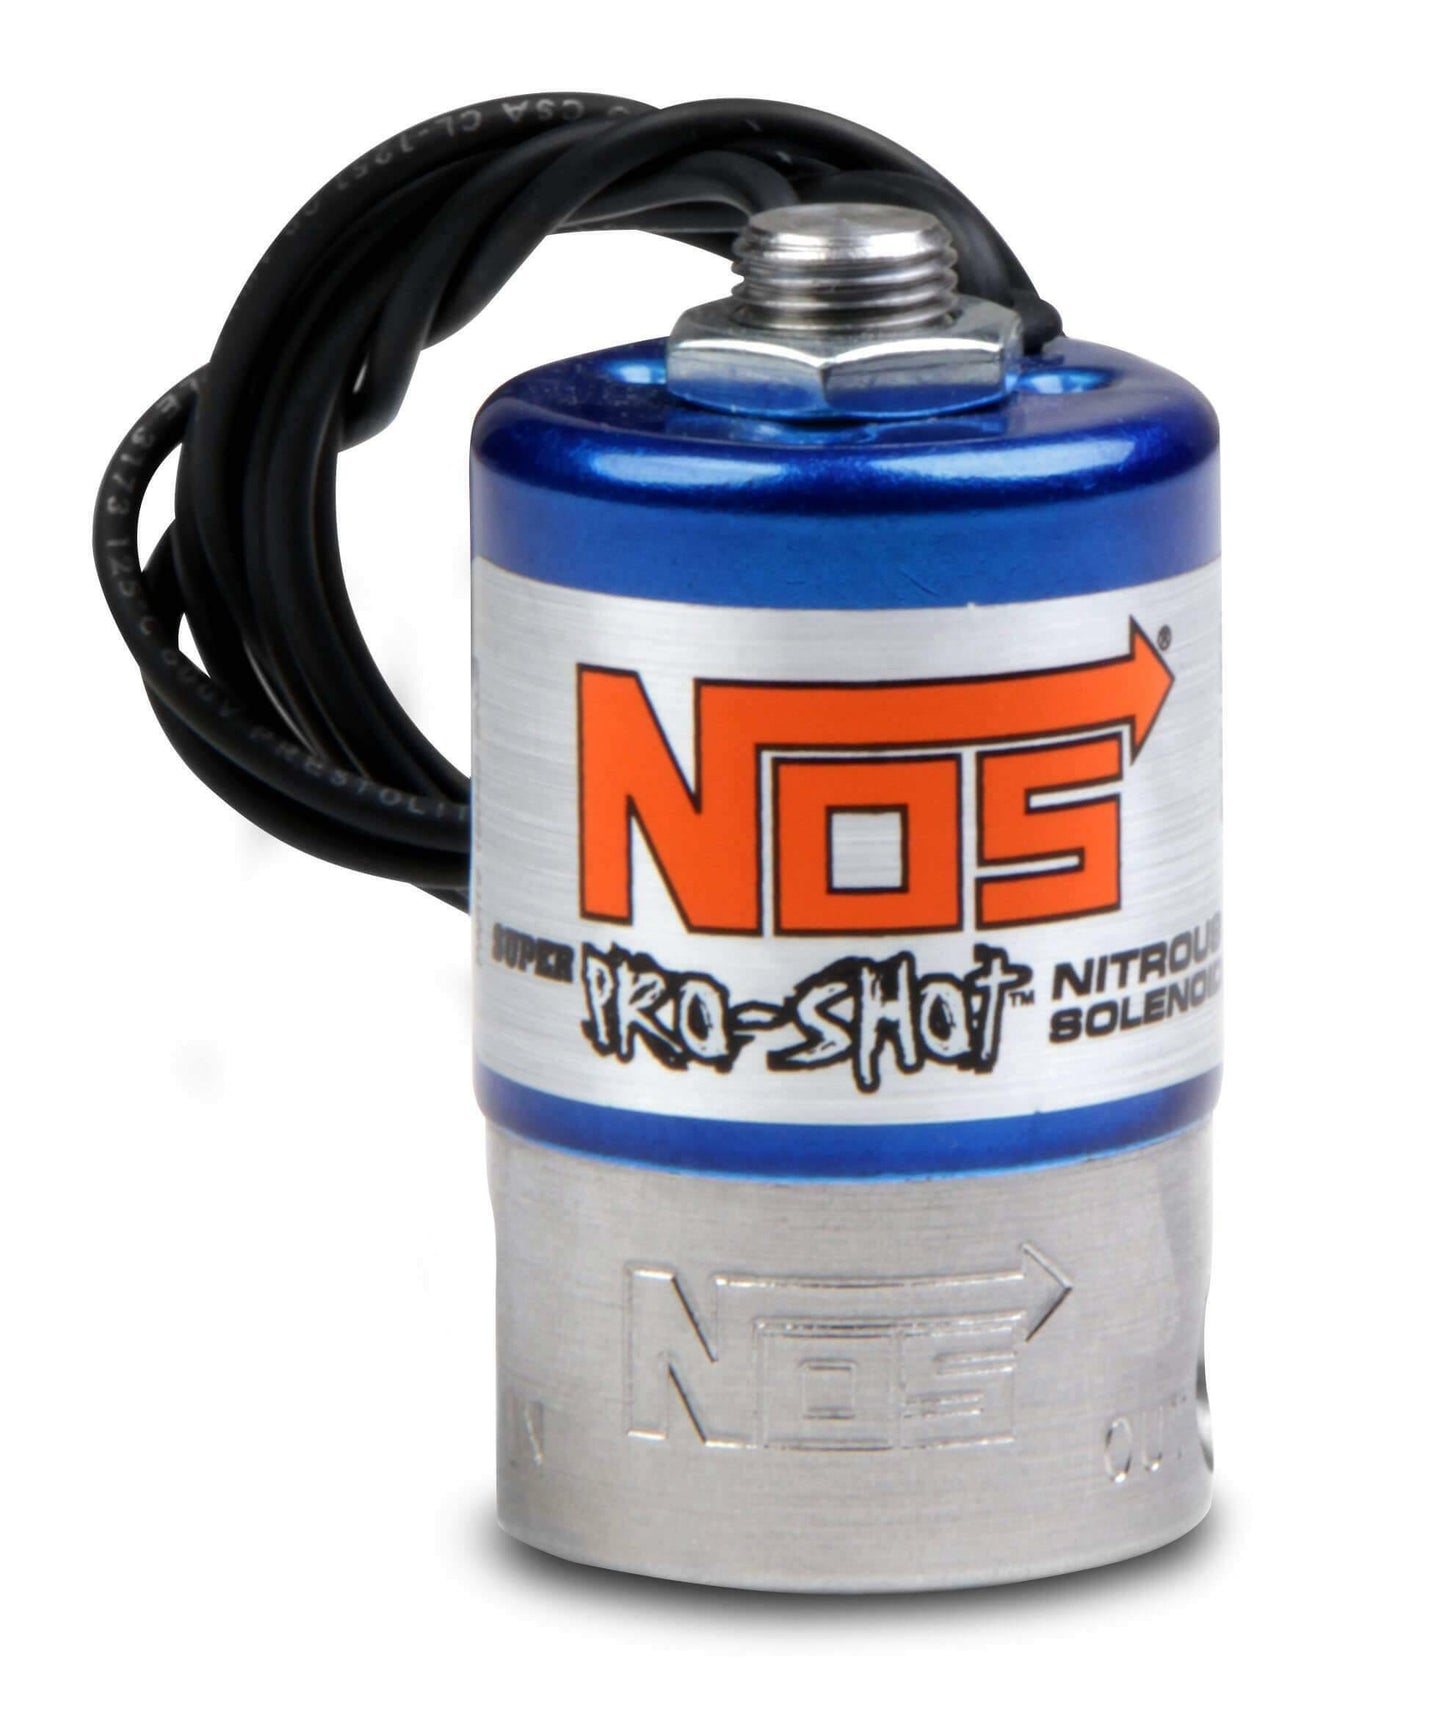 NOS Diesel Nitrous System w/ Mini 2 Stage Controller - 02522NOS